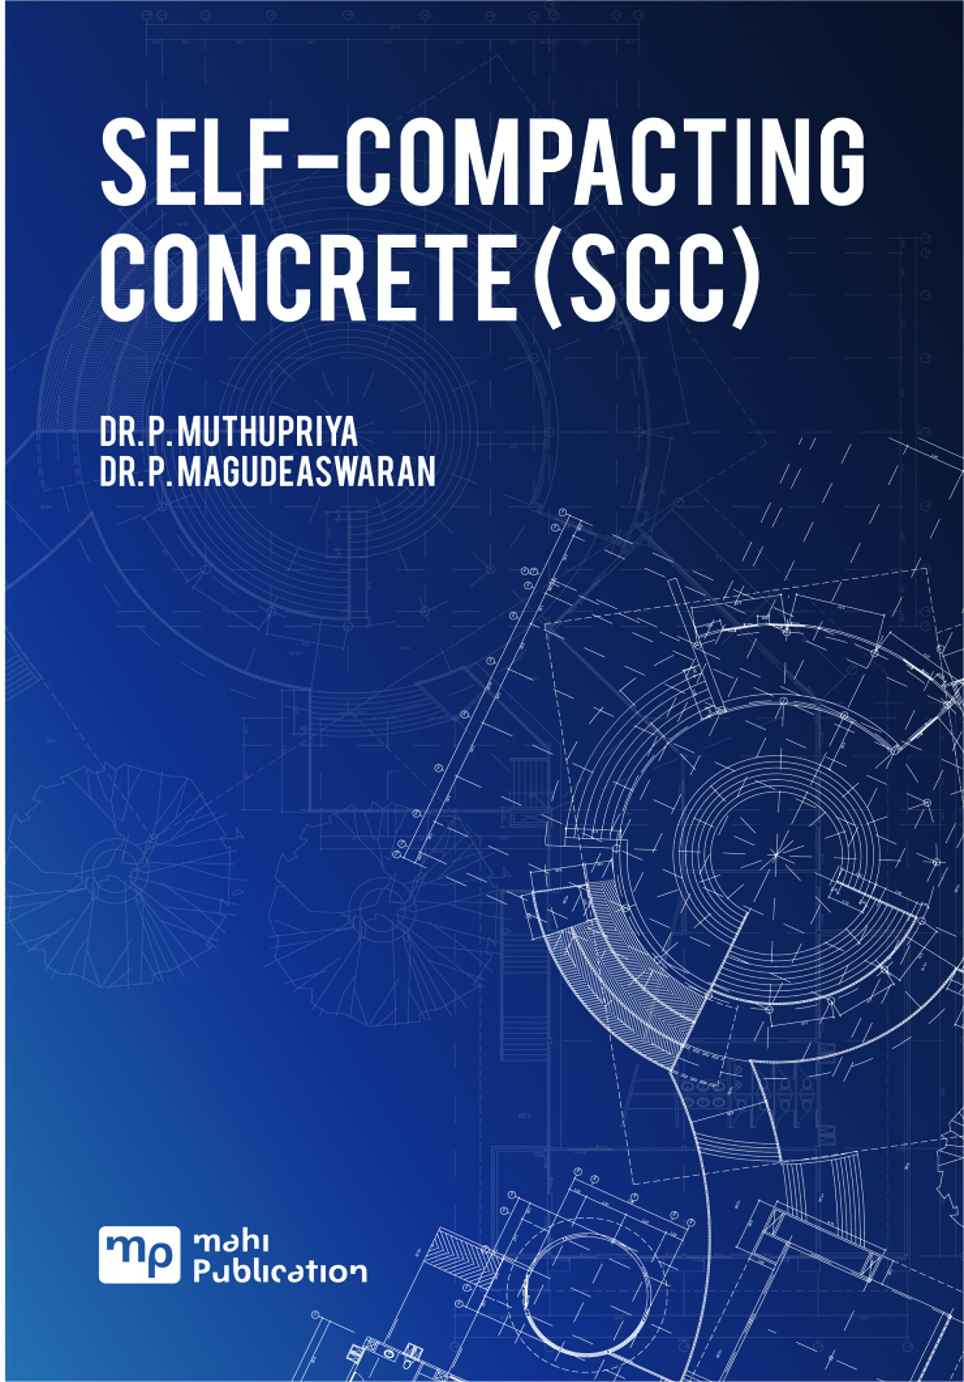 Self-Compacting Concrete (scc)